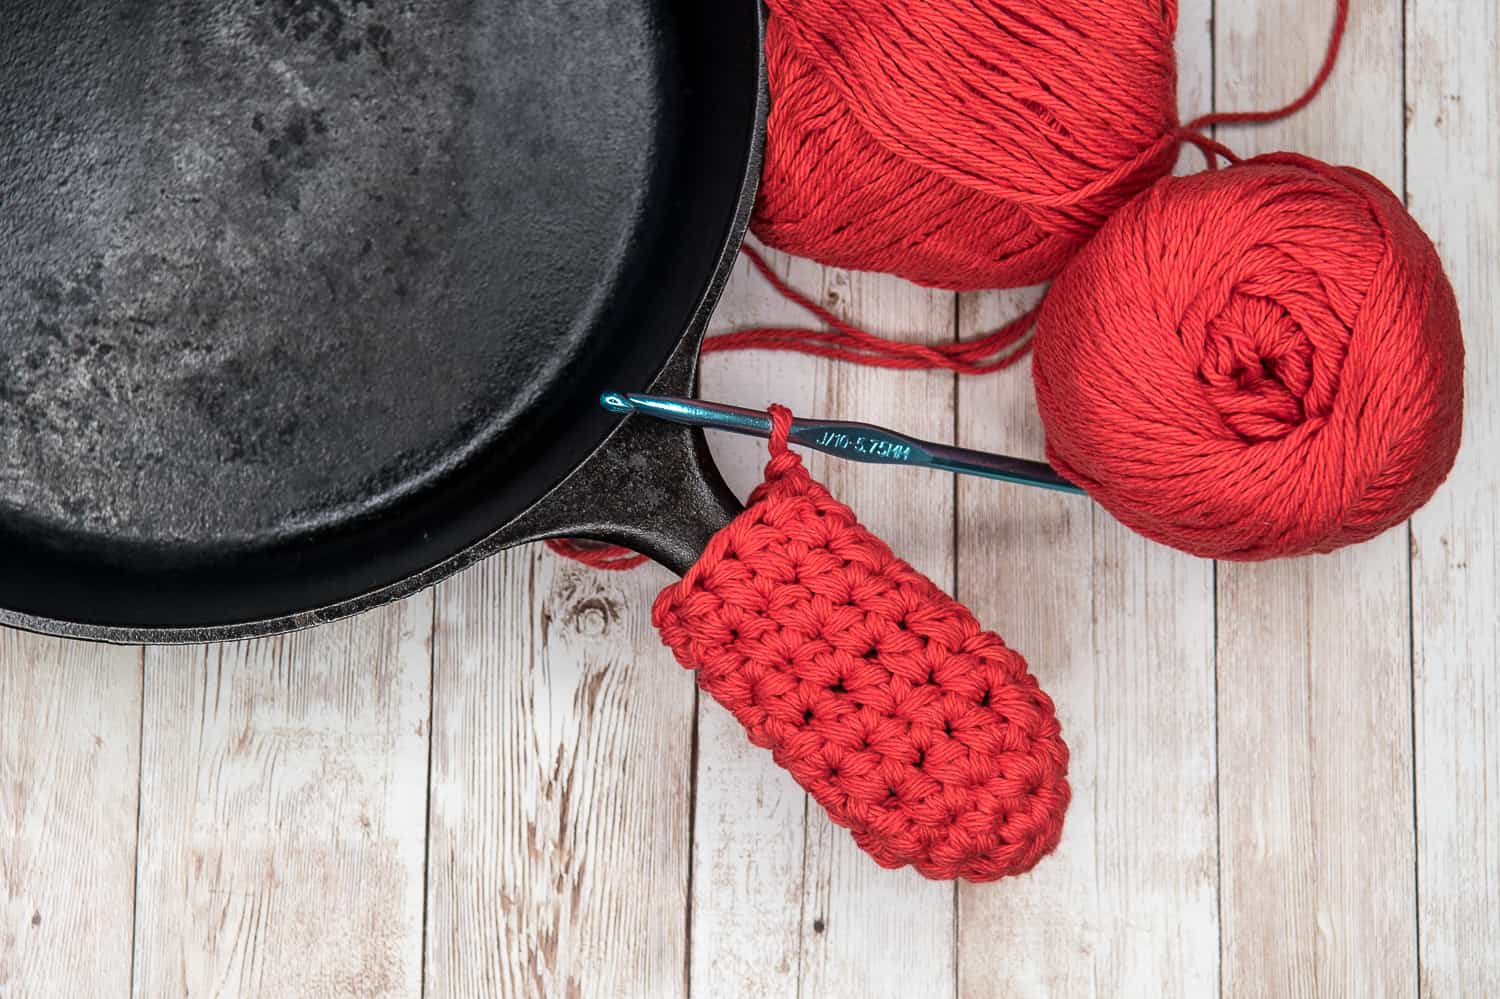 https://marialouisedesign.com/wp-content/uploads/2019/11/Crochet-Cast-Iron-Handle-and-Potholder-9.jpg